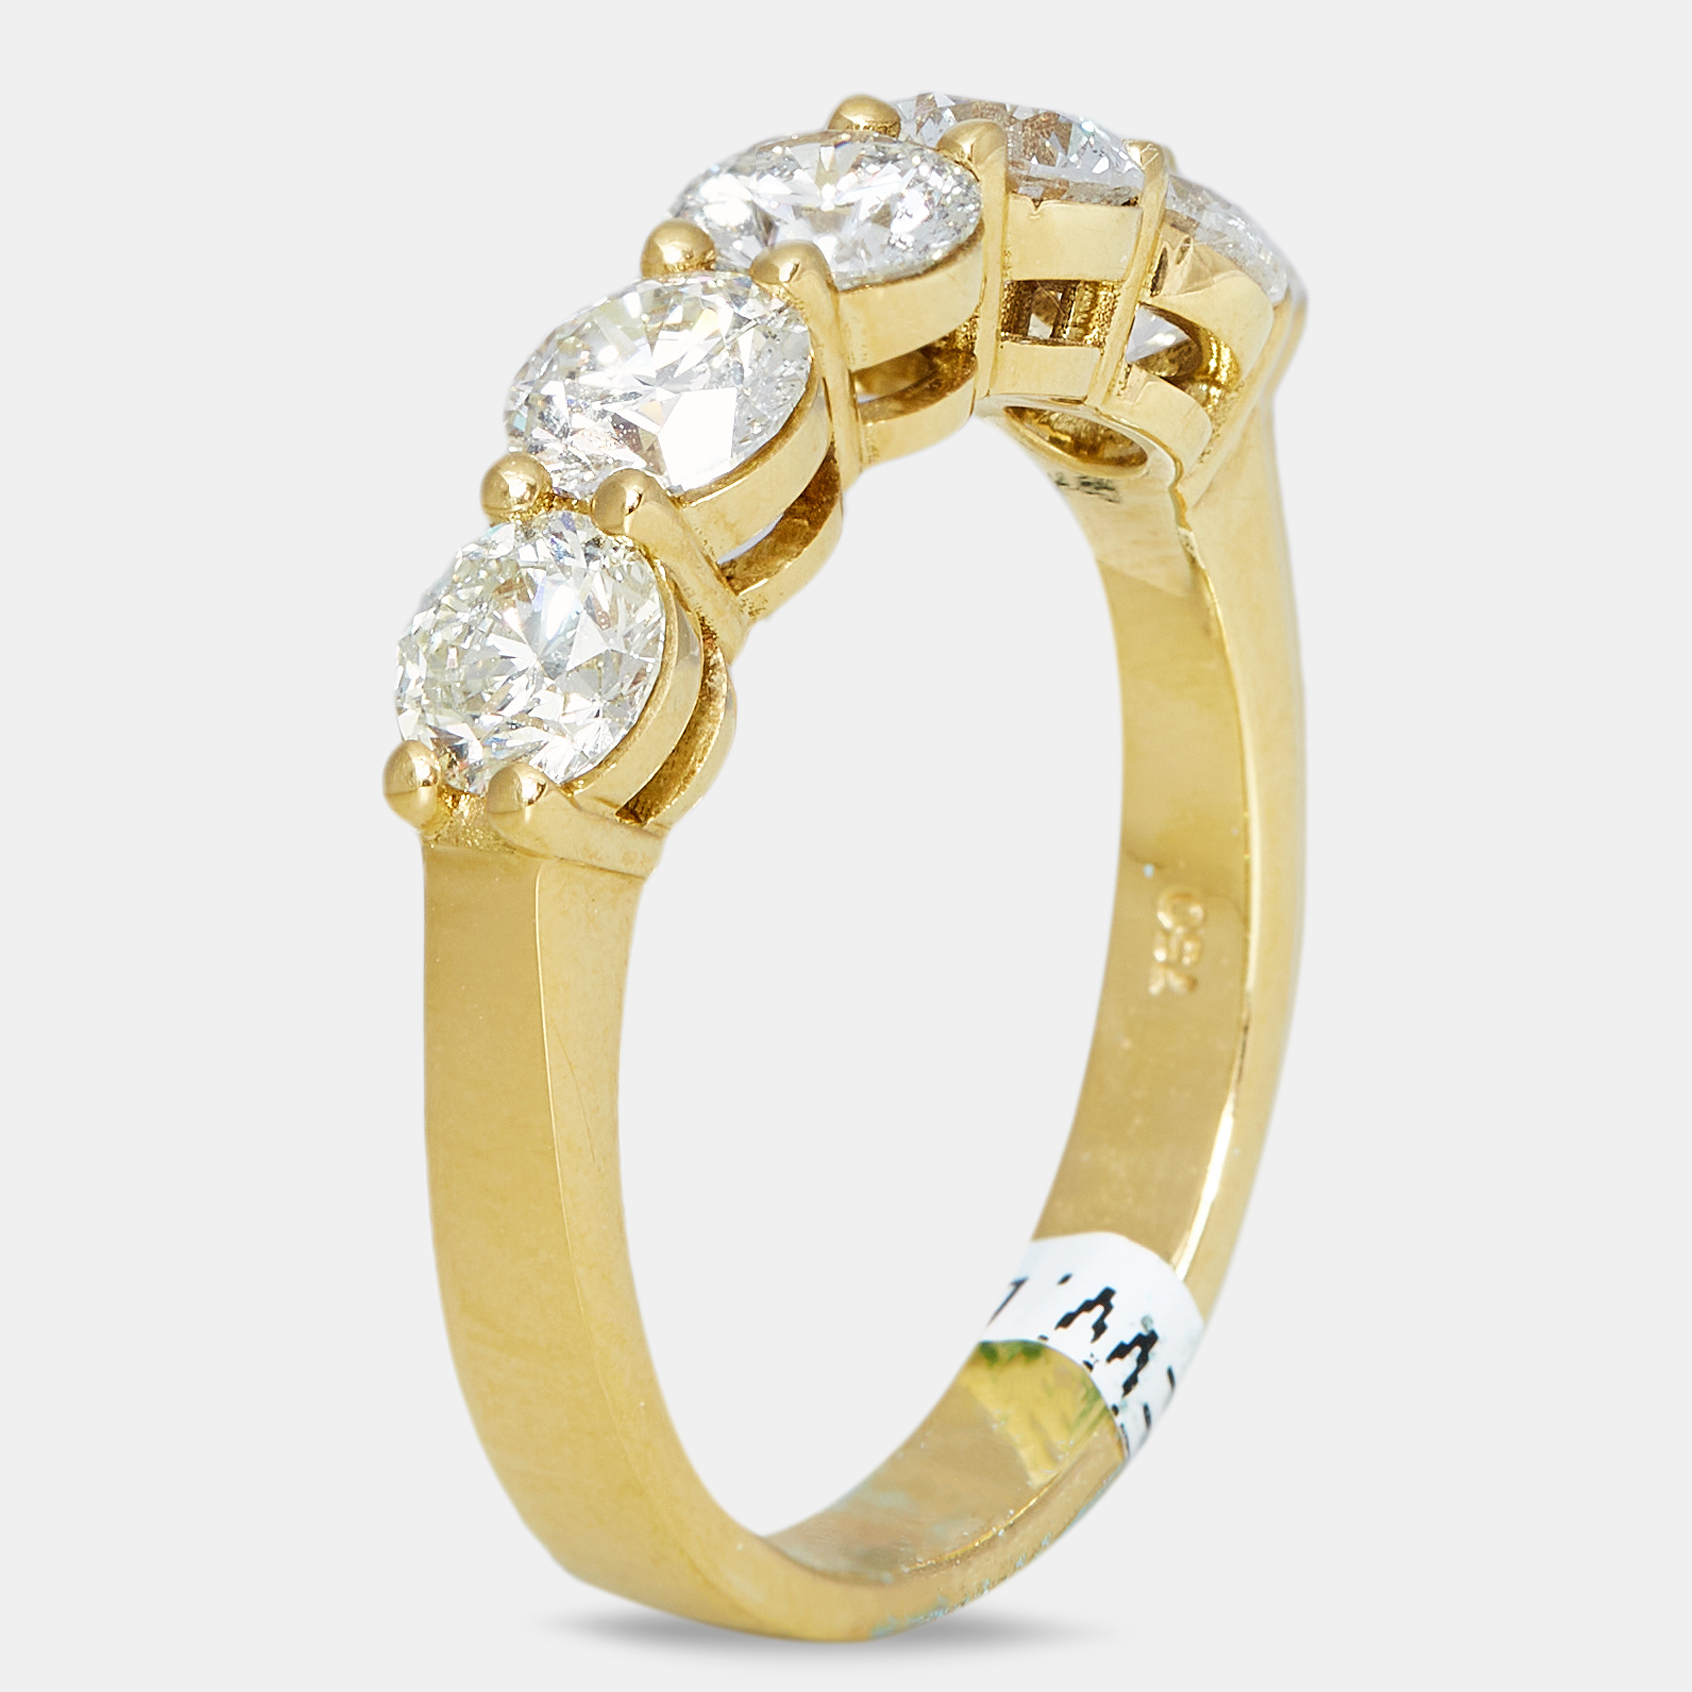 18k Yellow Gold 1 Ct Diamond Ring EU 55